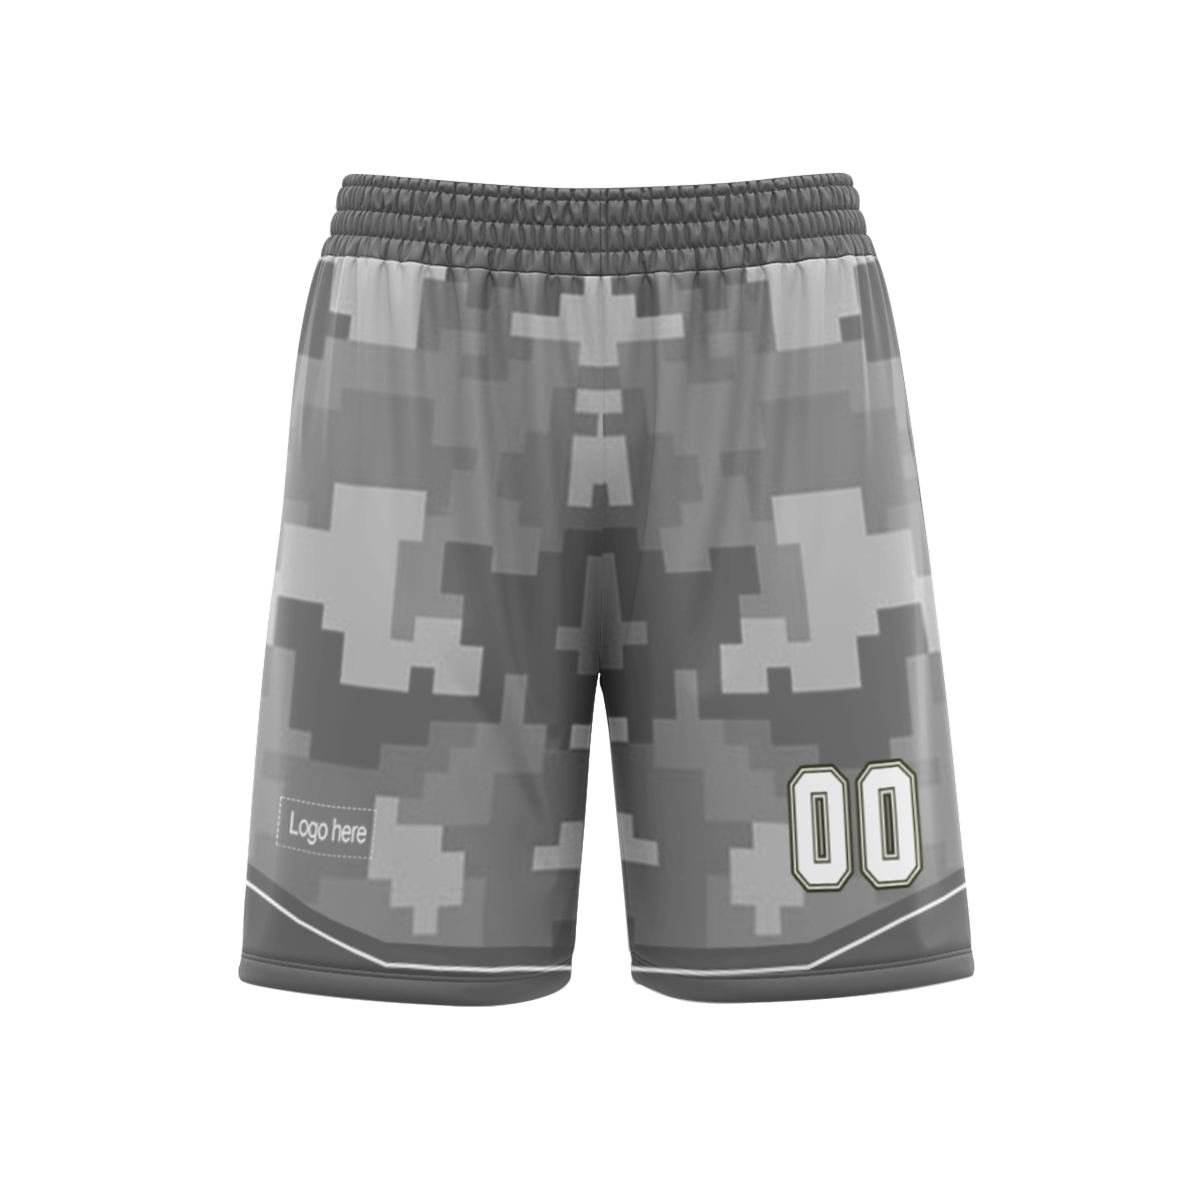 factory-outlet-custom-logo-basketball-t-shirt-uniform-comfortable-sleeveless-sportswear-basketball-jerseys-for-men-at-cj-pod-7